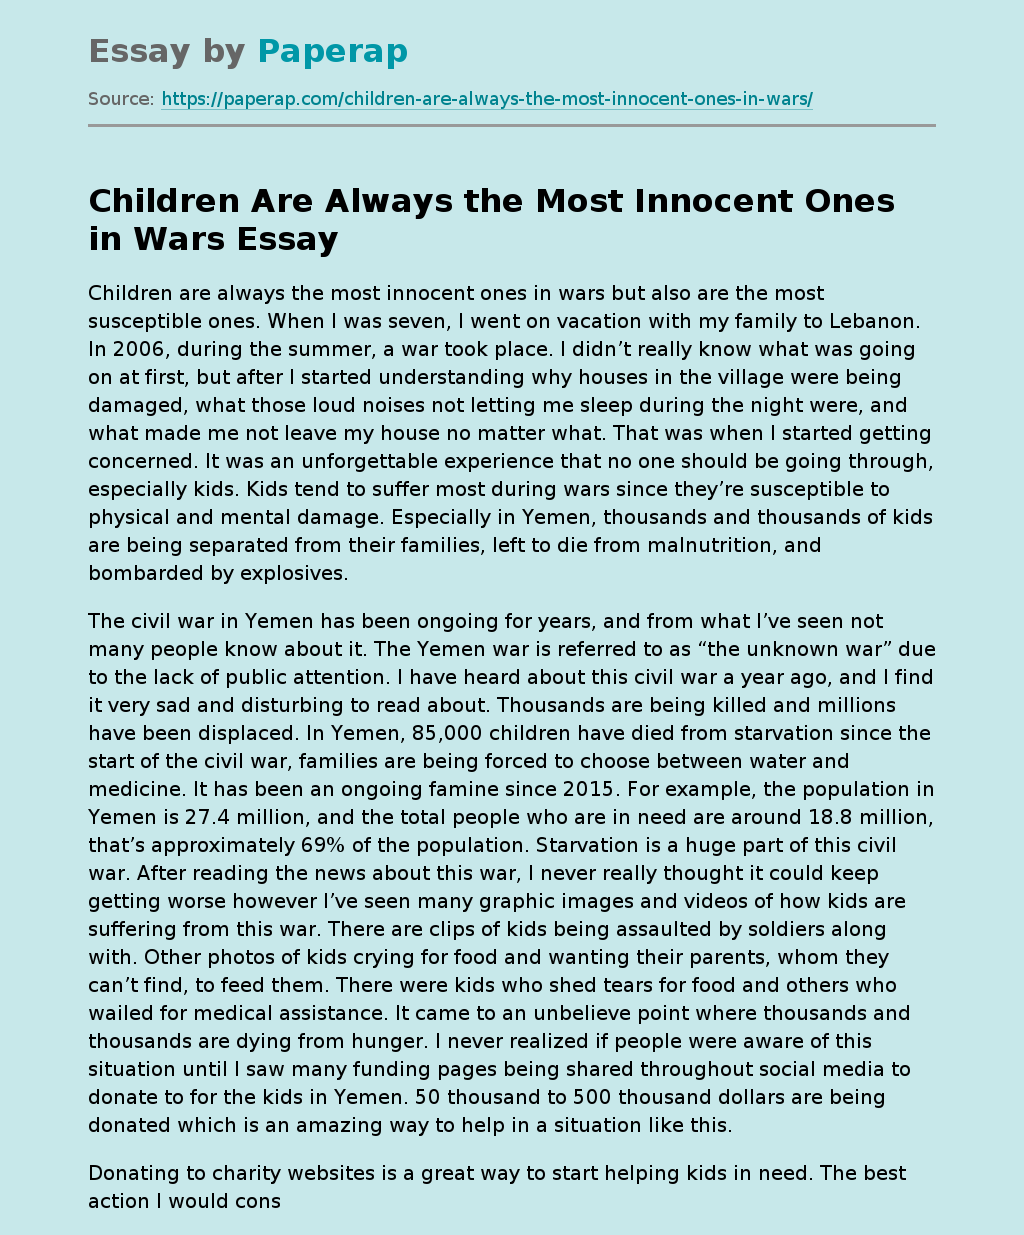 Children Are Always the Most Innocent Ones in Wars